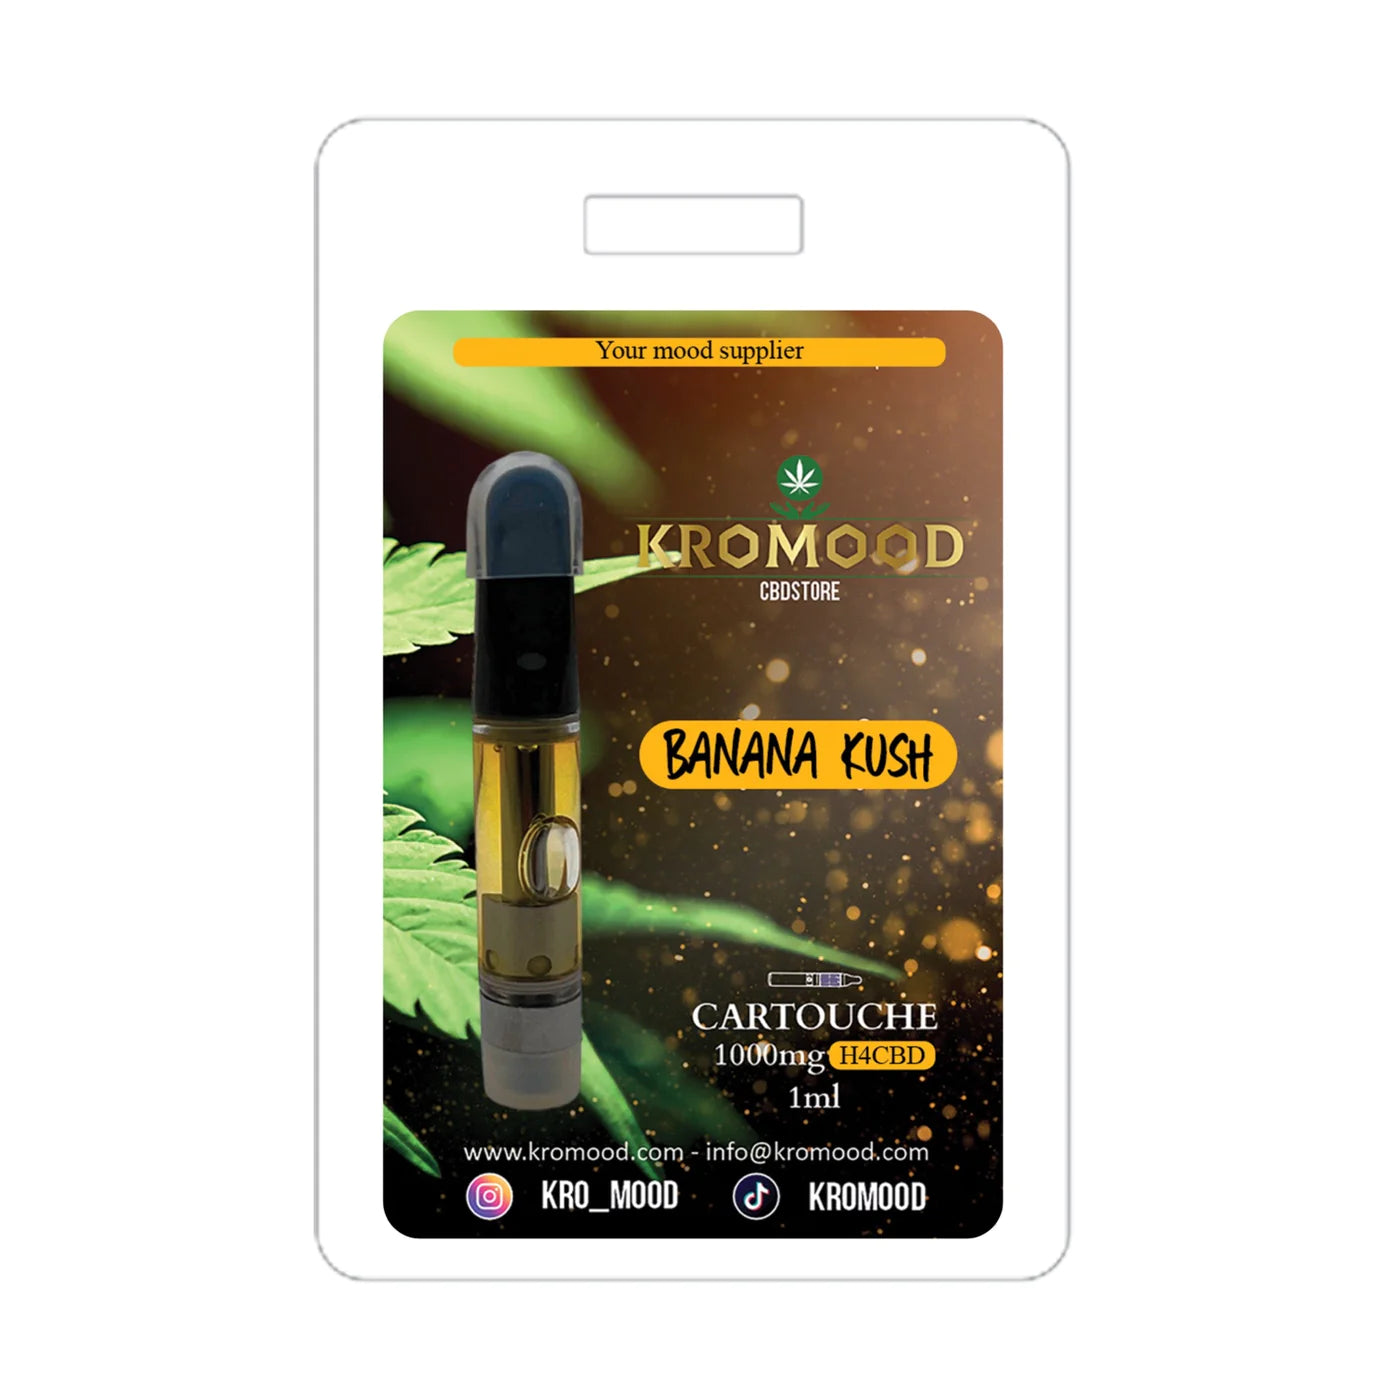 KroMood Cartridge (Dab Pen) of H4CBD - BlueBerry - 1ML - 600 puffs